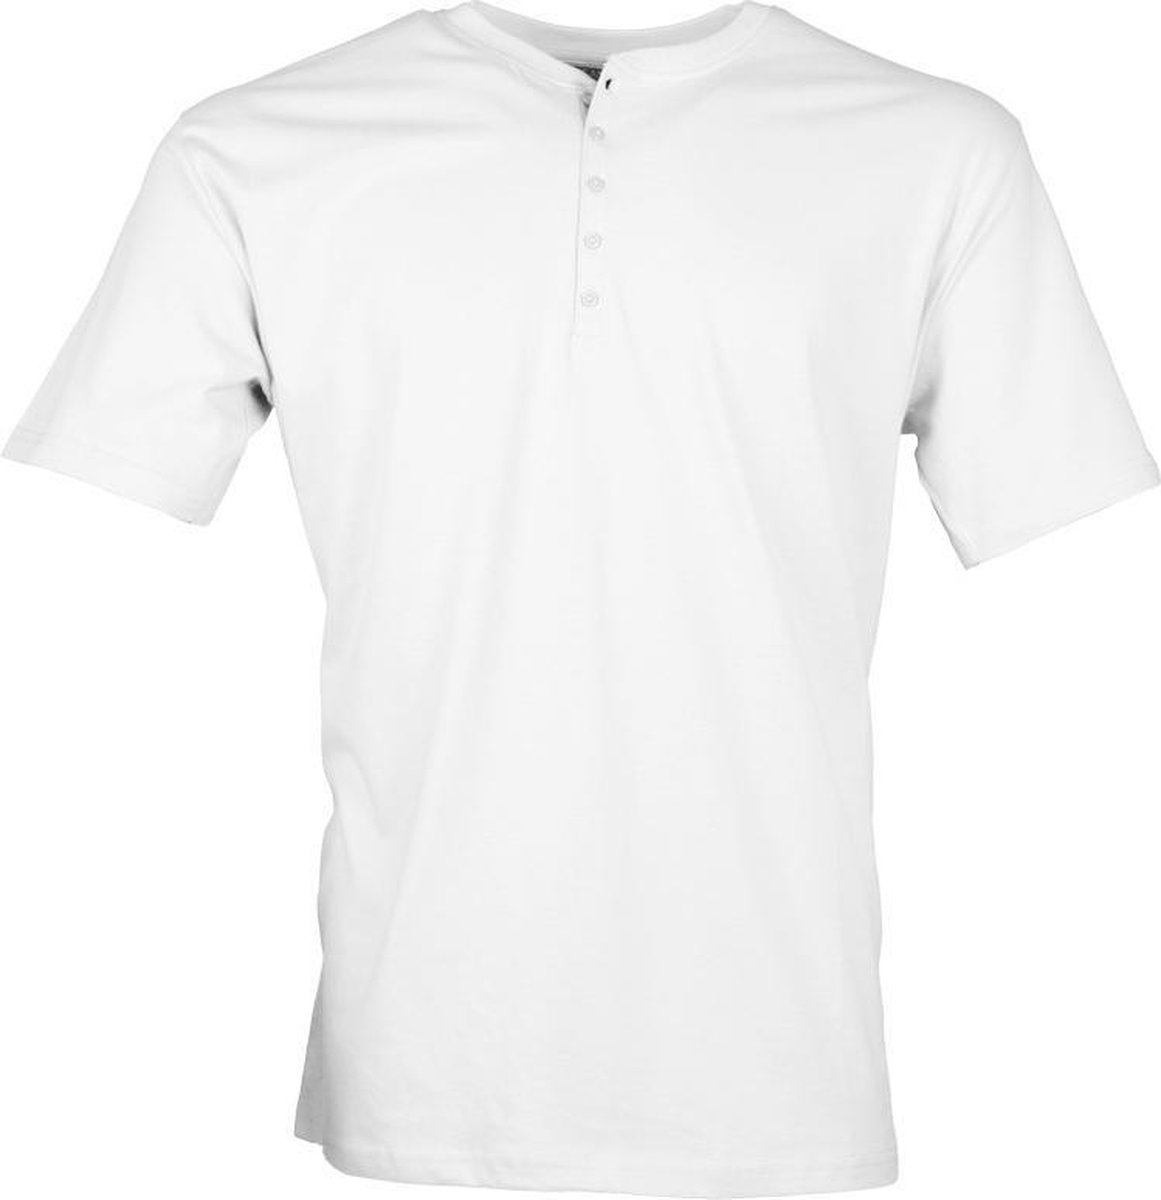 Losan Basic - Heren T-Shirt - Korte Mouw - Ronde Hals - Knoopjes - Wit - Maat L